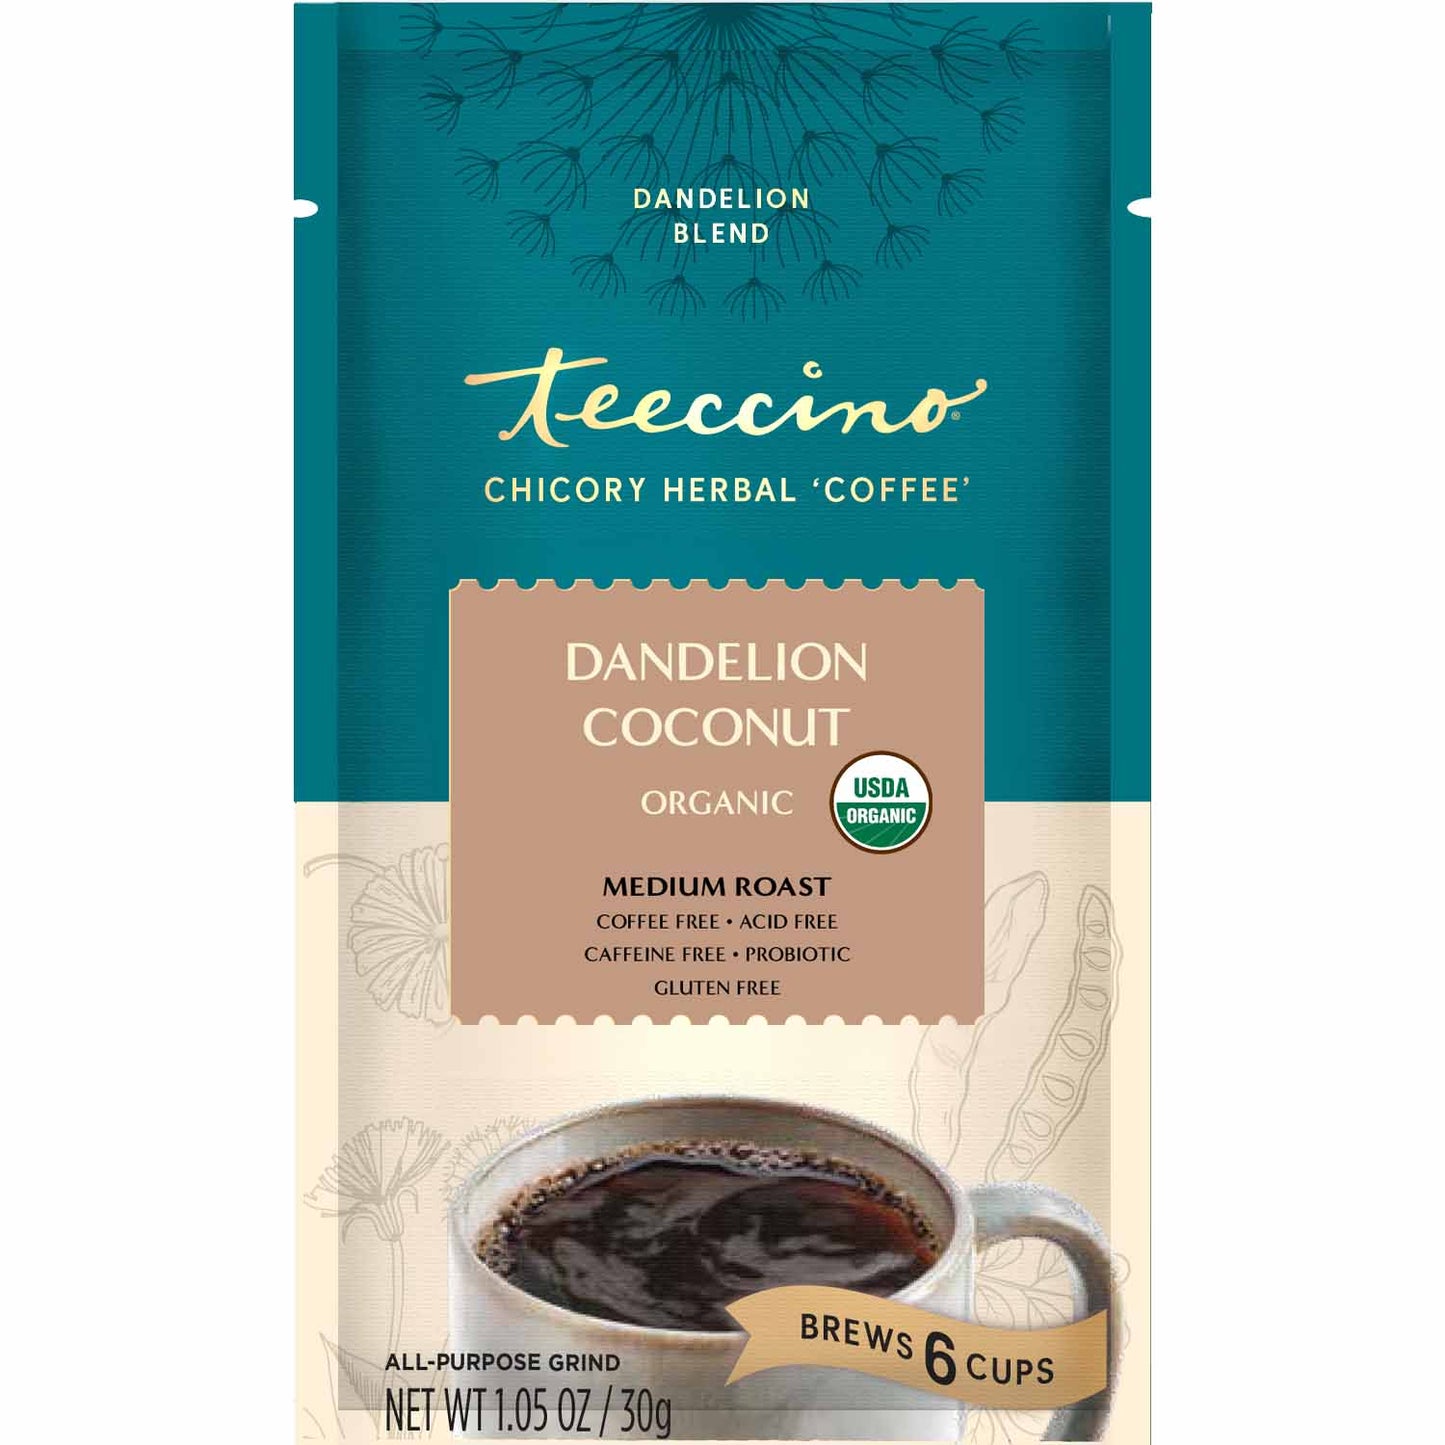 Dandelion Coconut Herbal Coffee